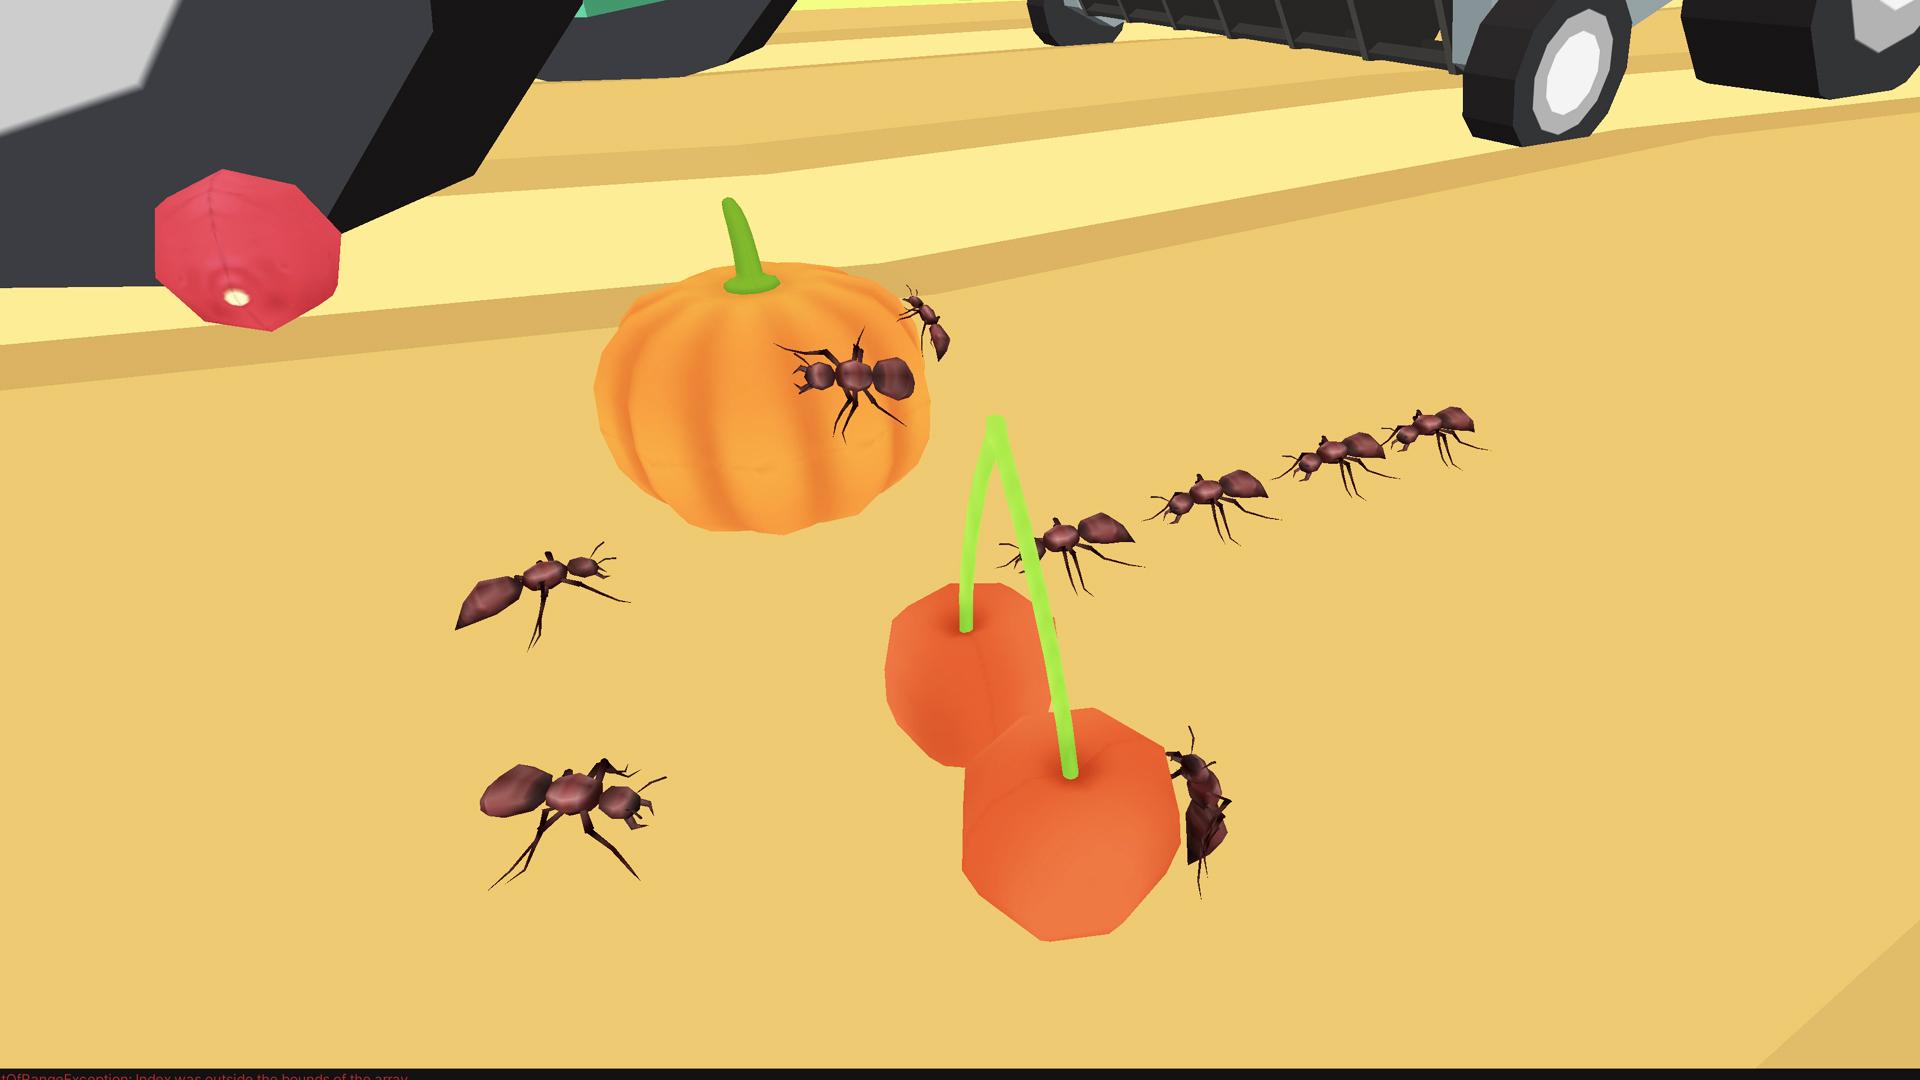 Ant Colony игра. Квест муравей игра. The Ants игра на андроид. Игра про муравьев на андроид. Игра симулятор муравья